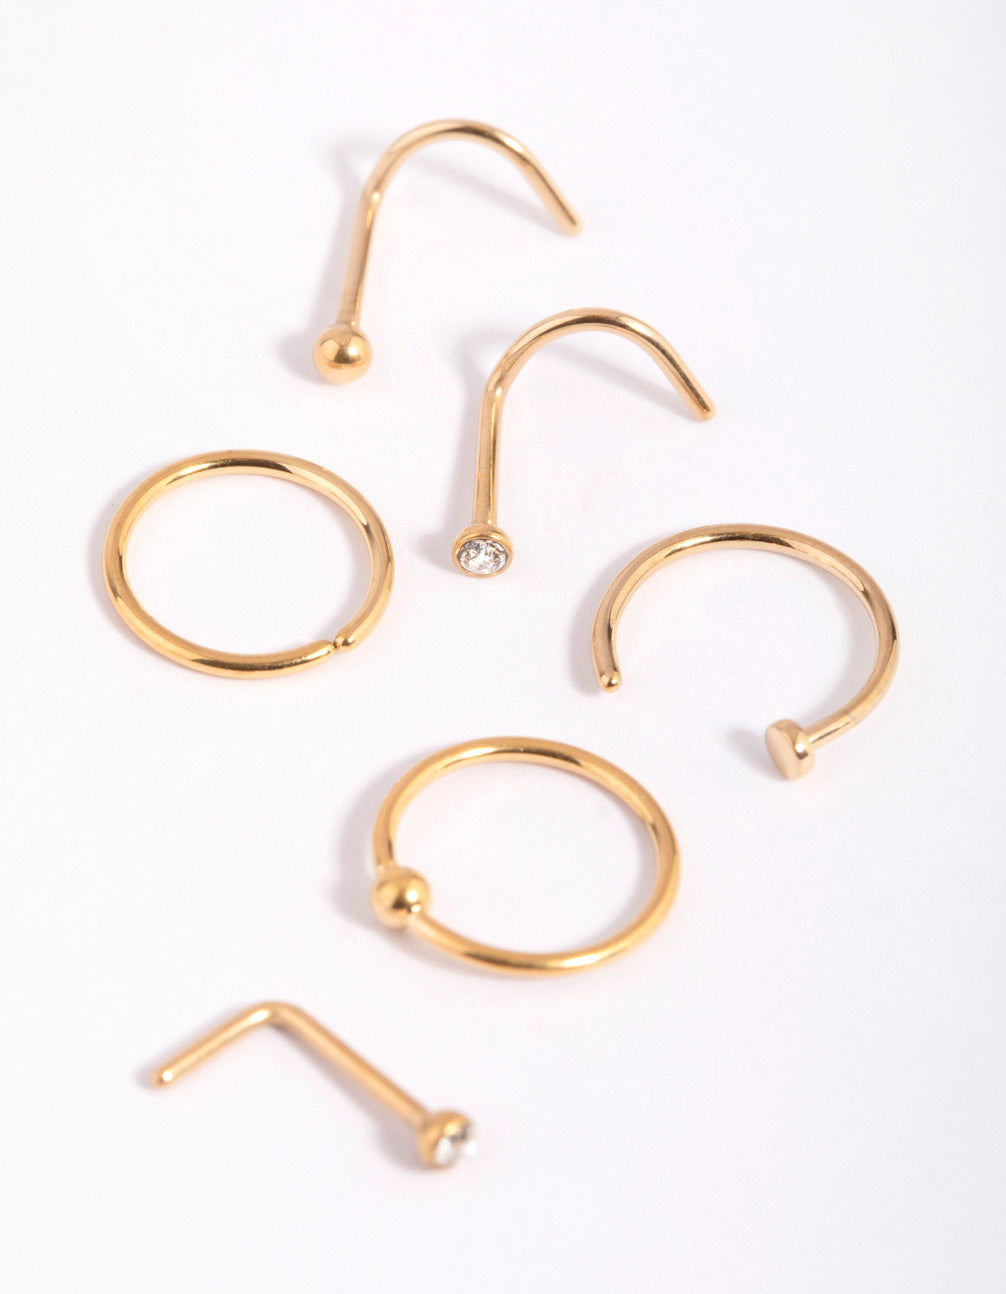 Lovisa Gold-Plated Titanium Nose Stud 6-Pack, Size: 20G/0.8